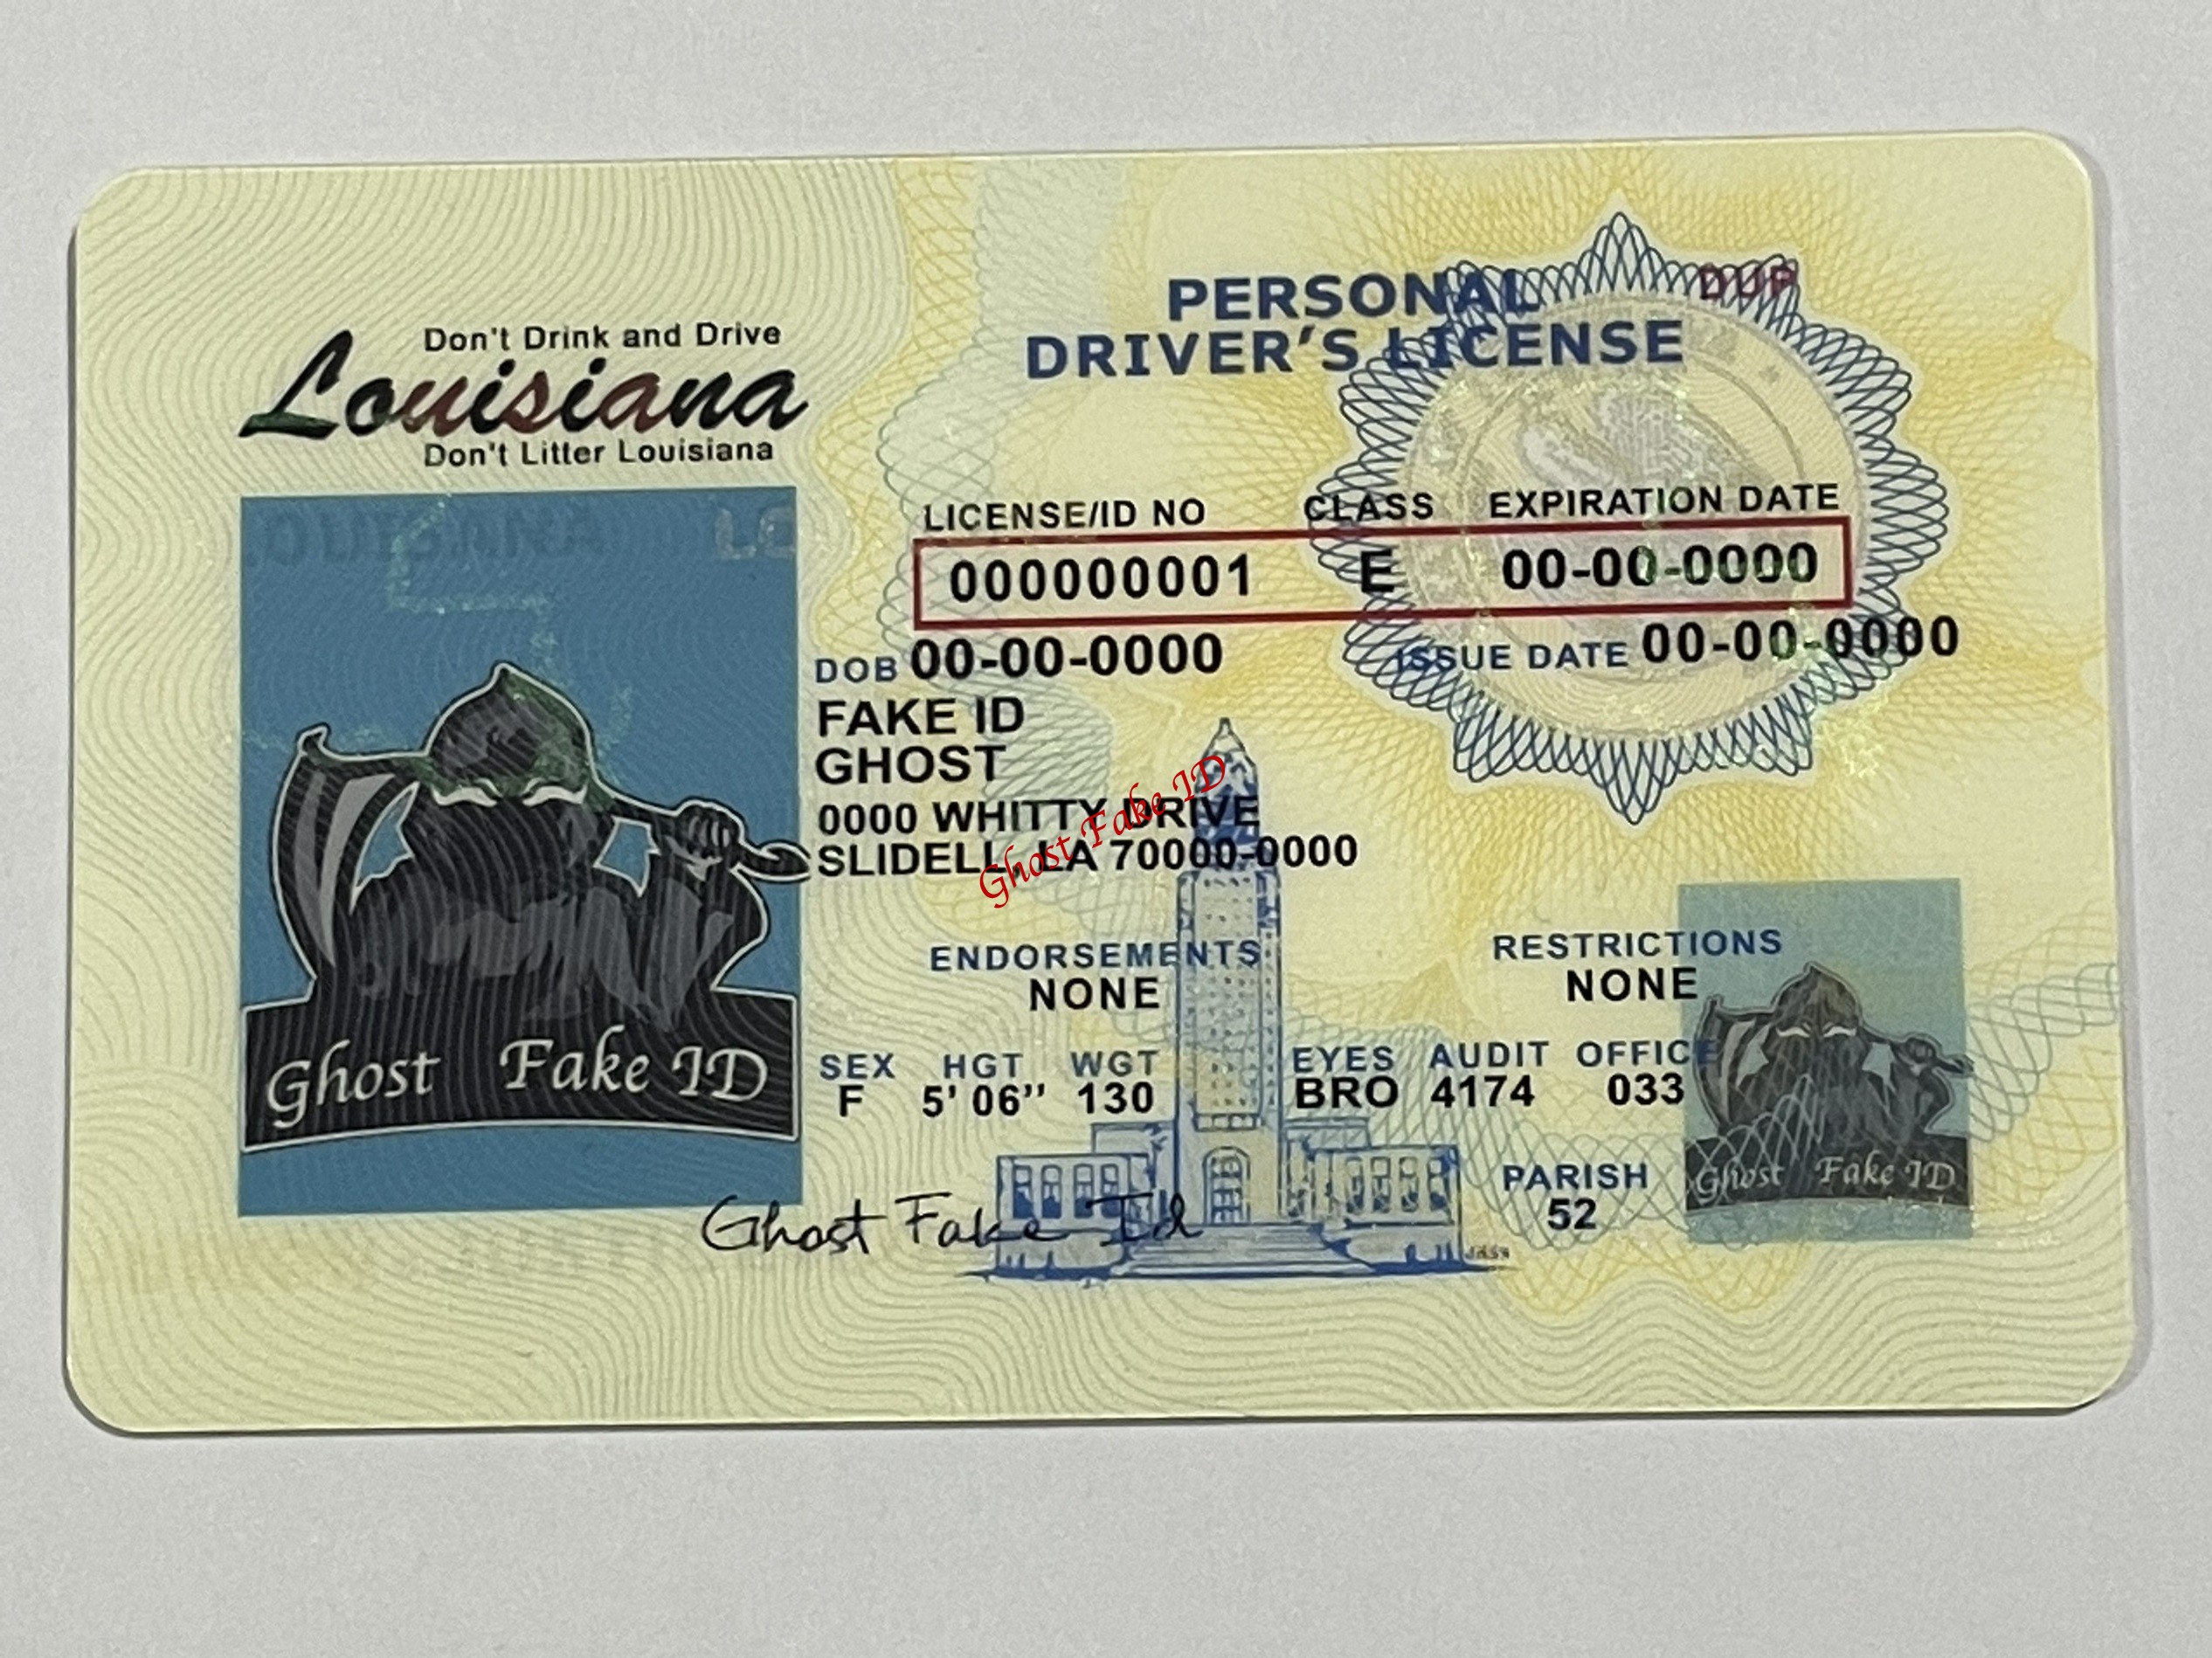 Louisiana - Scanable fake id